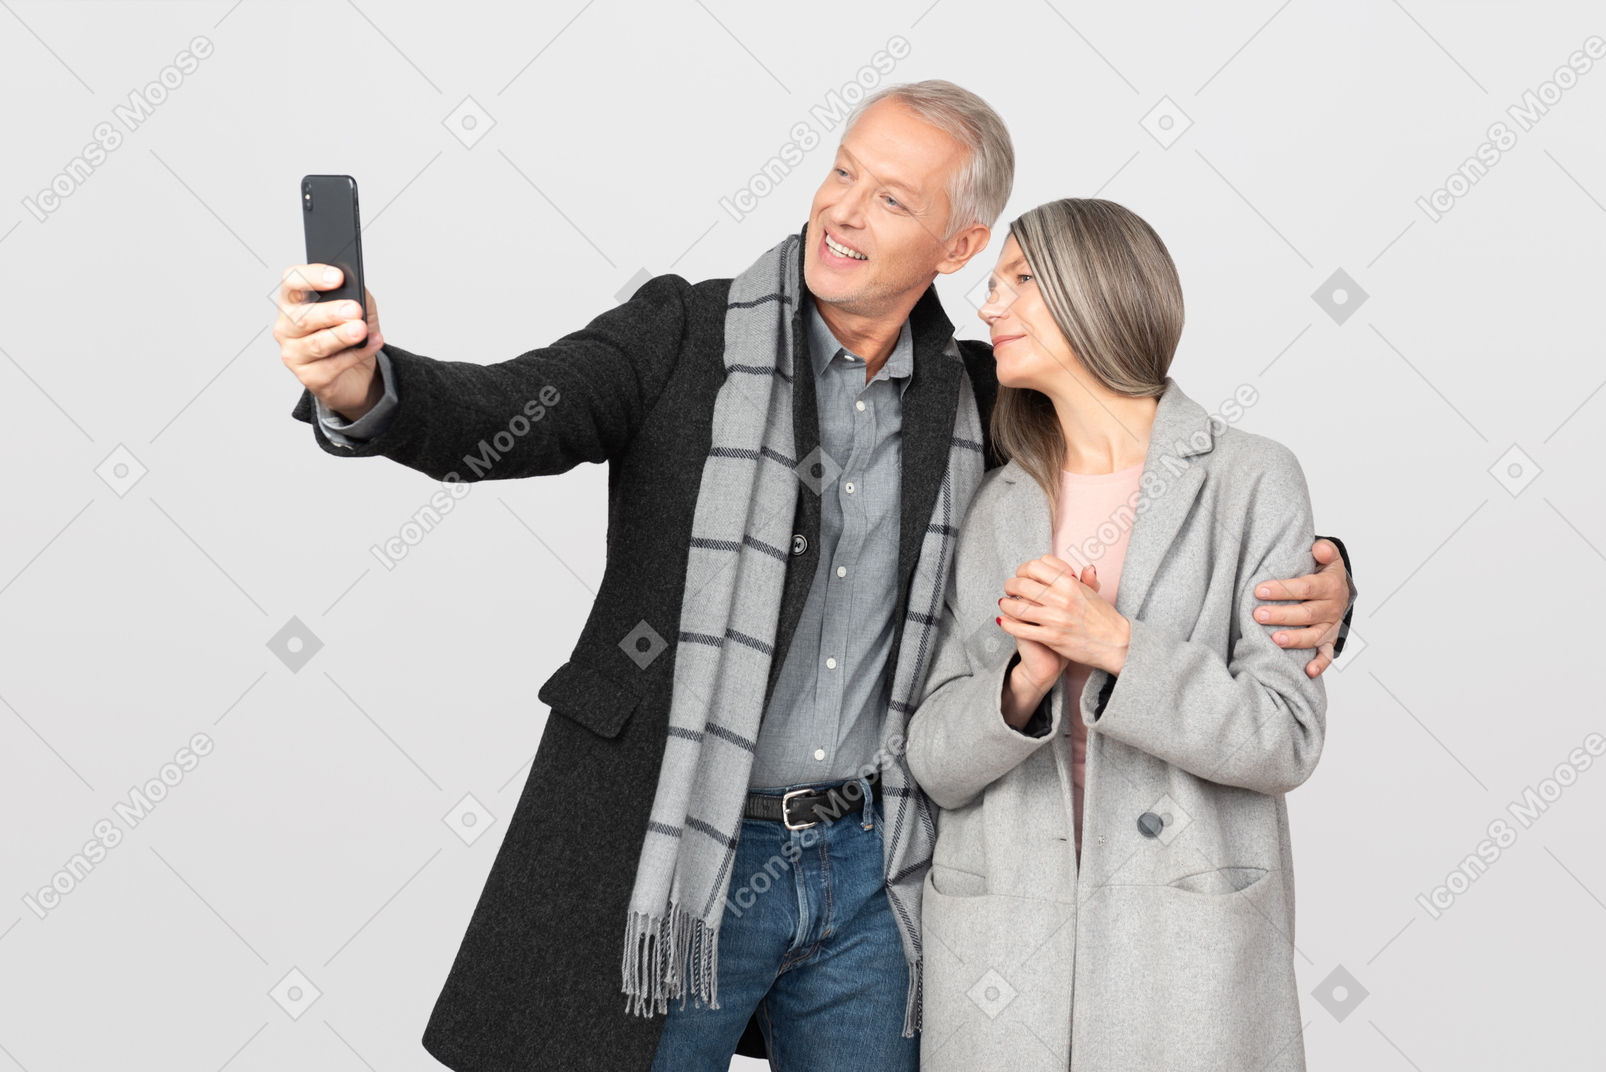 Man and woman making selfie